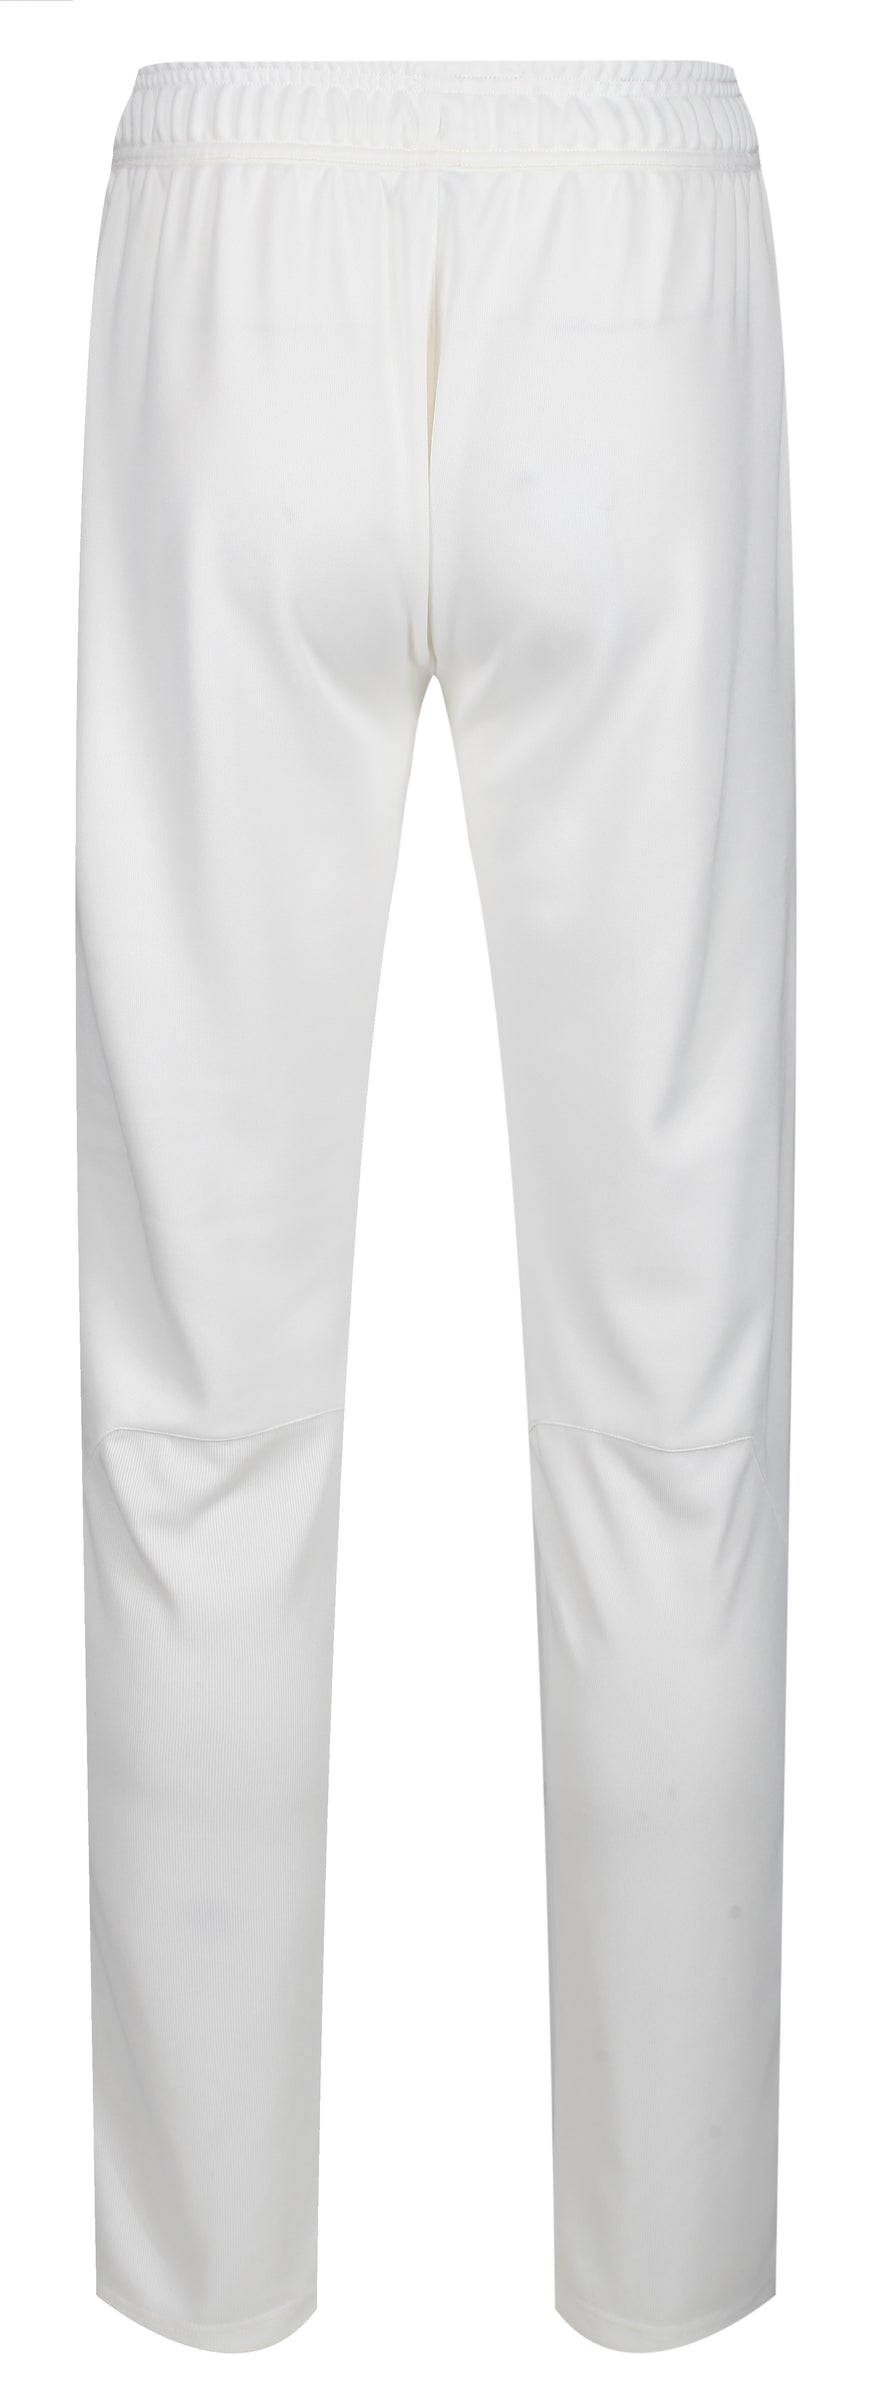 MBS Premium Cricket Trousers - Senior